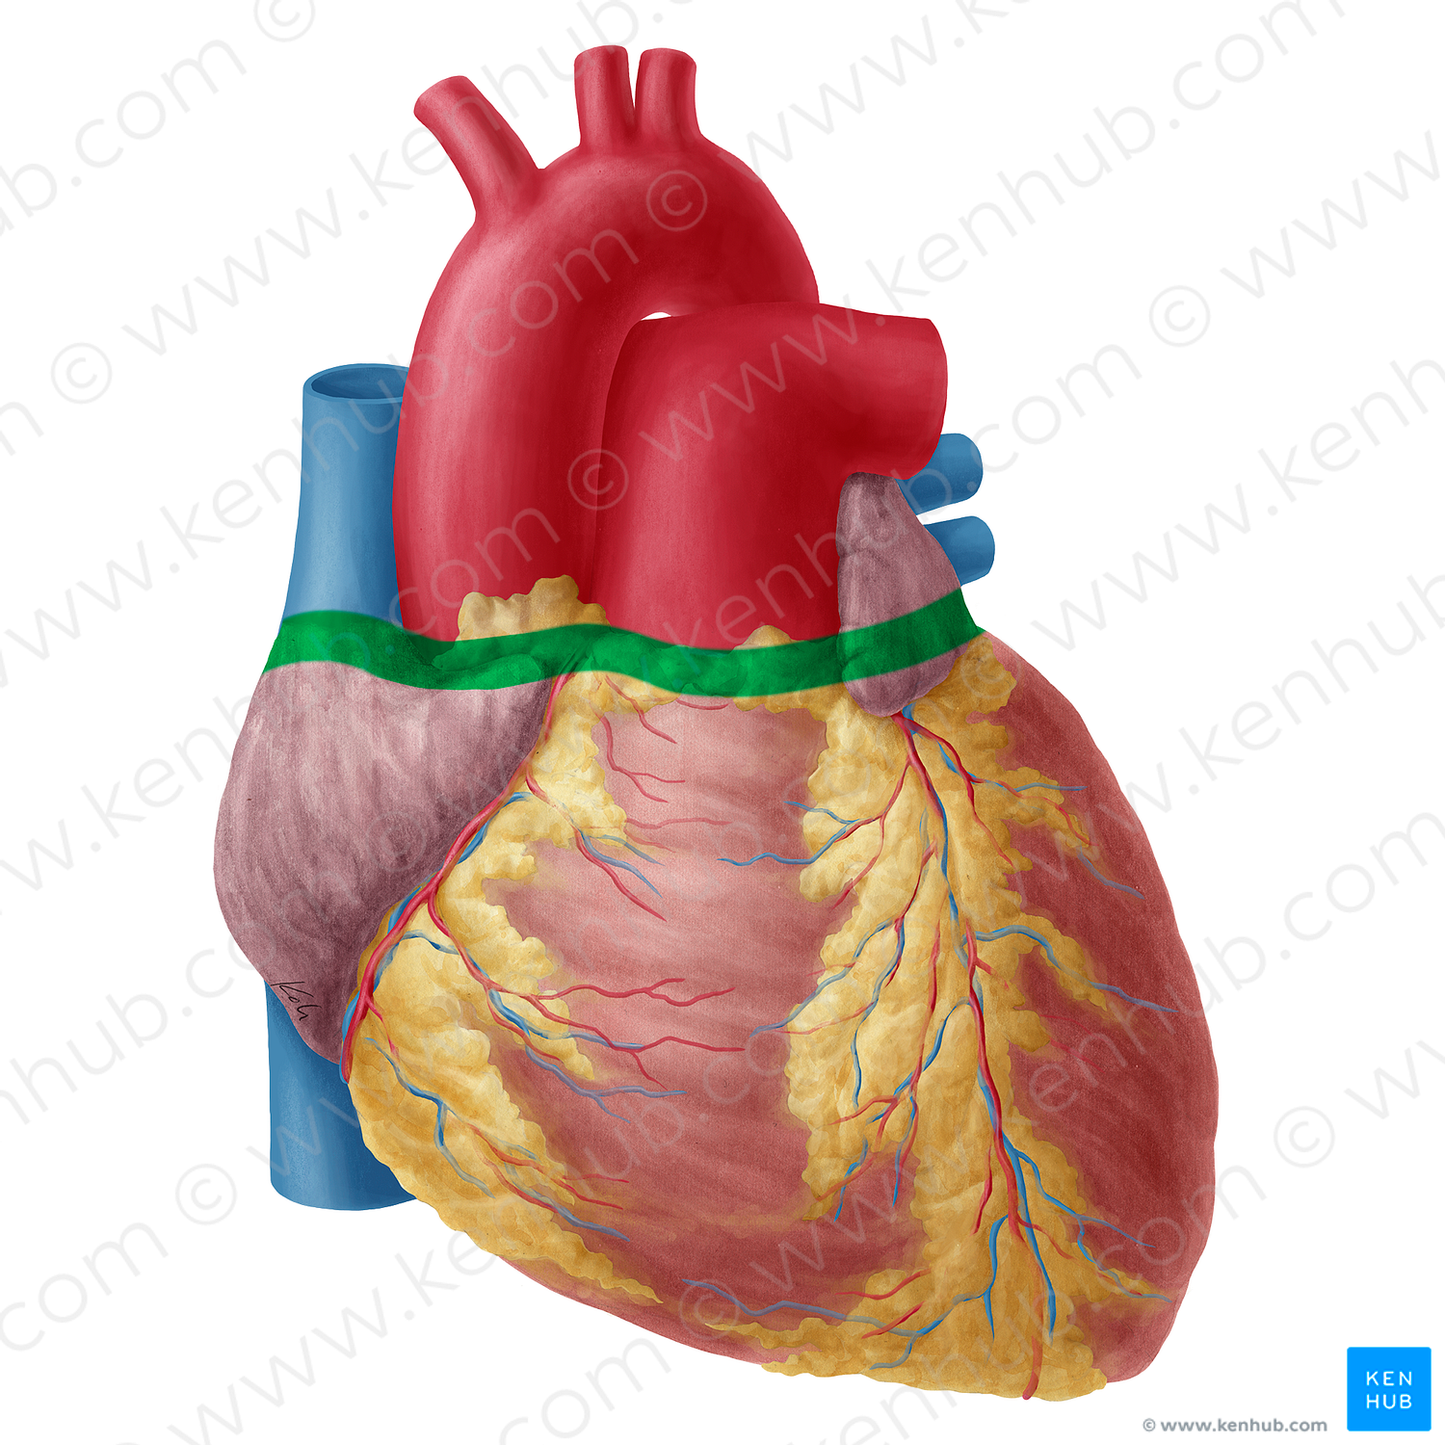 Superior border of heart (#20250)